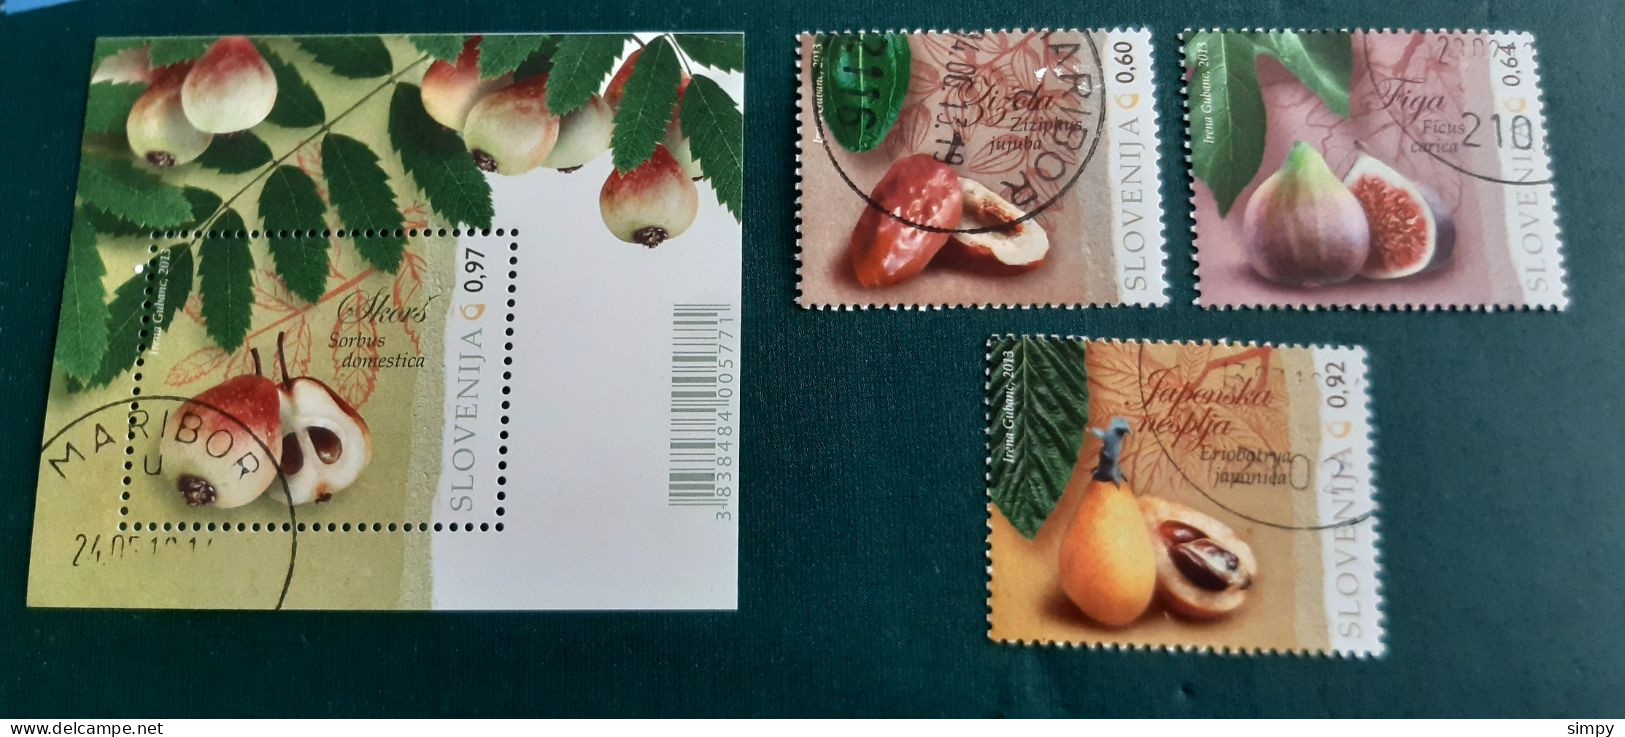 SLOVENIA 2013 Flora Fruits Used Stamps + Block - Eslovenia